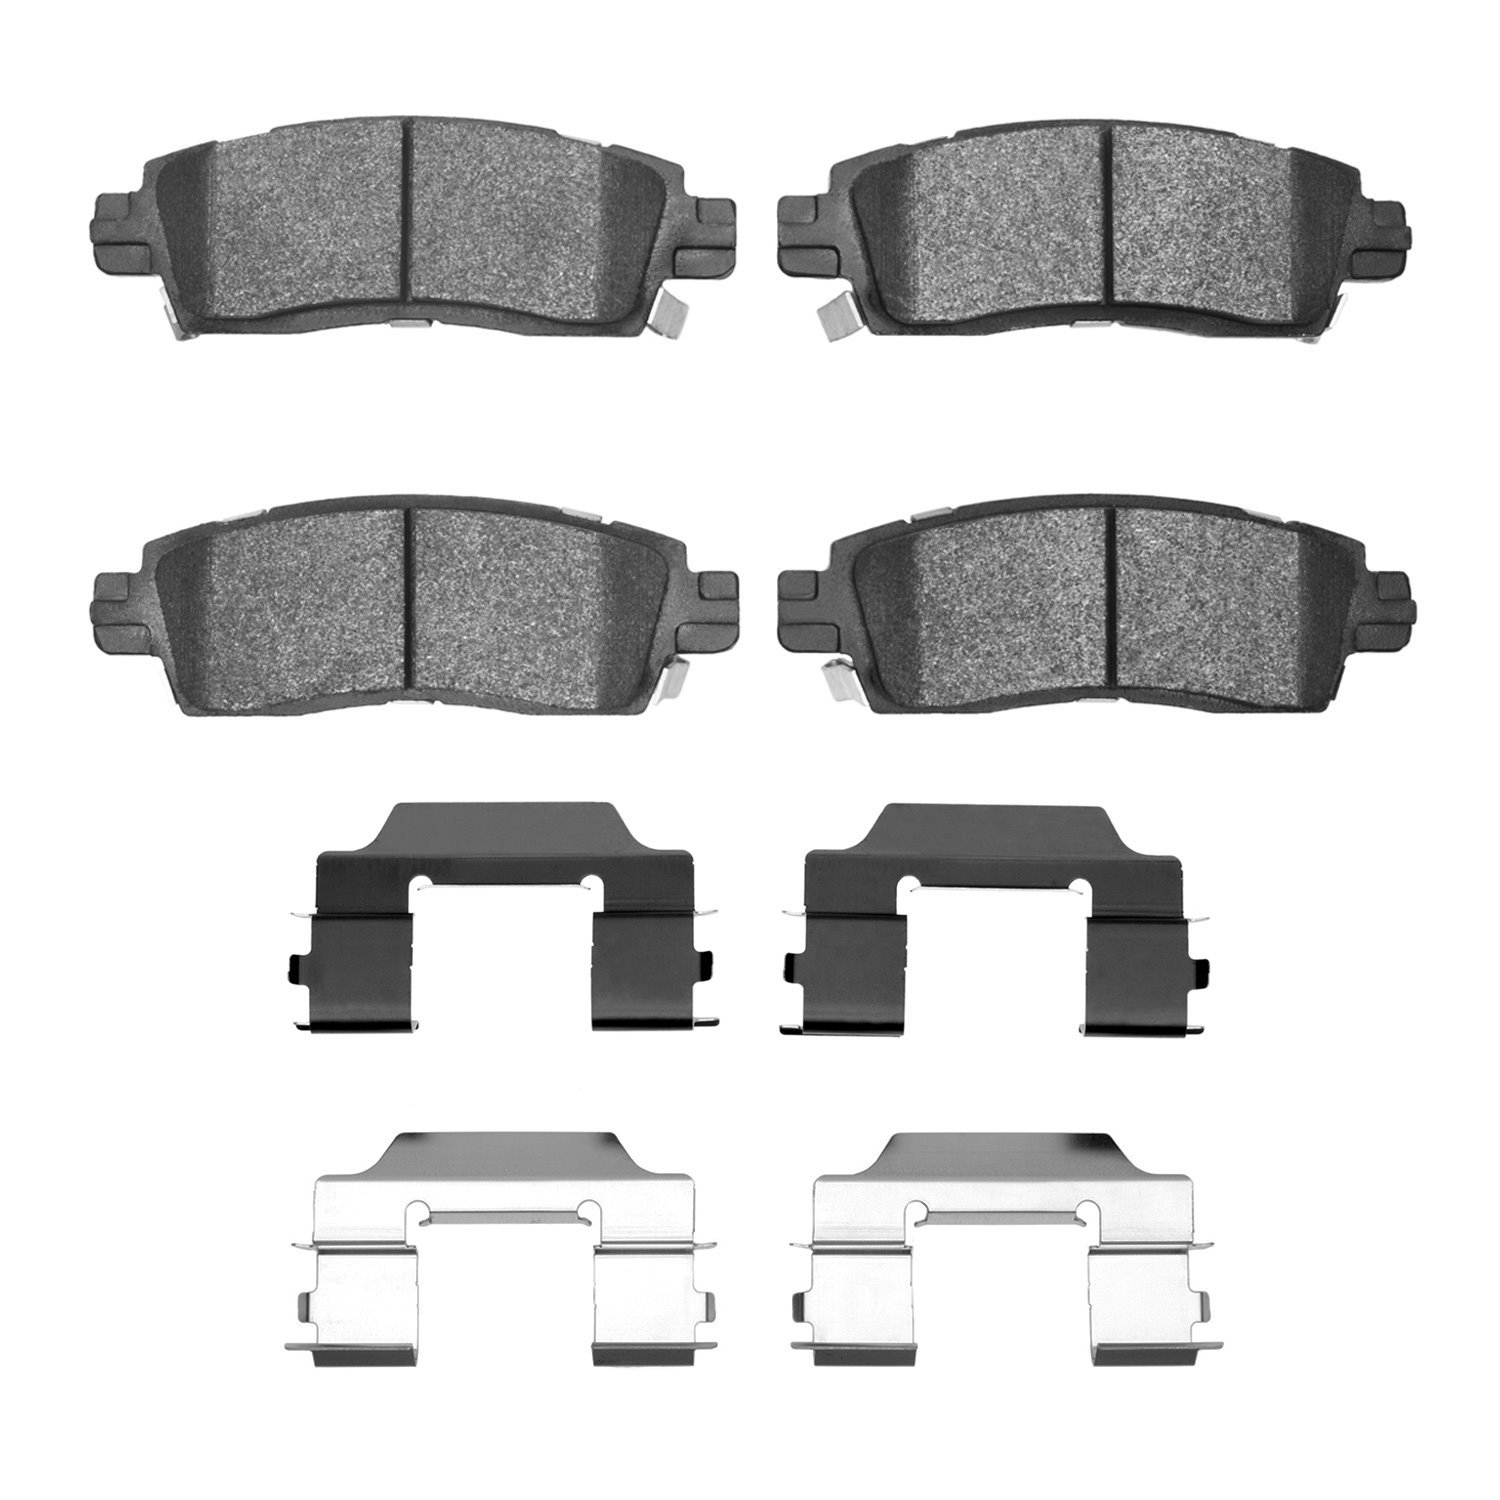 1551-0883-01 5000 Advanced Ceramic Brake Pads & Hardware Kit, 2002-2019 GM, Position: Rear